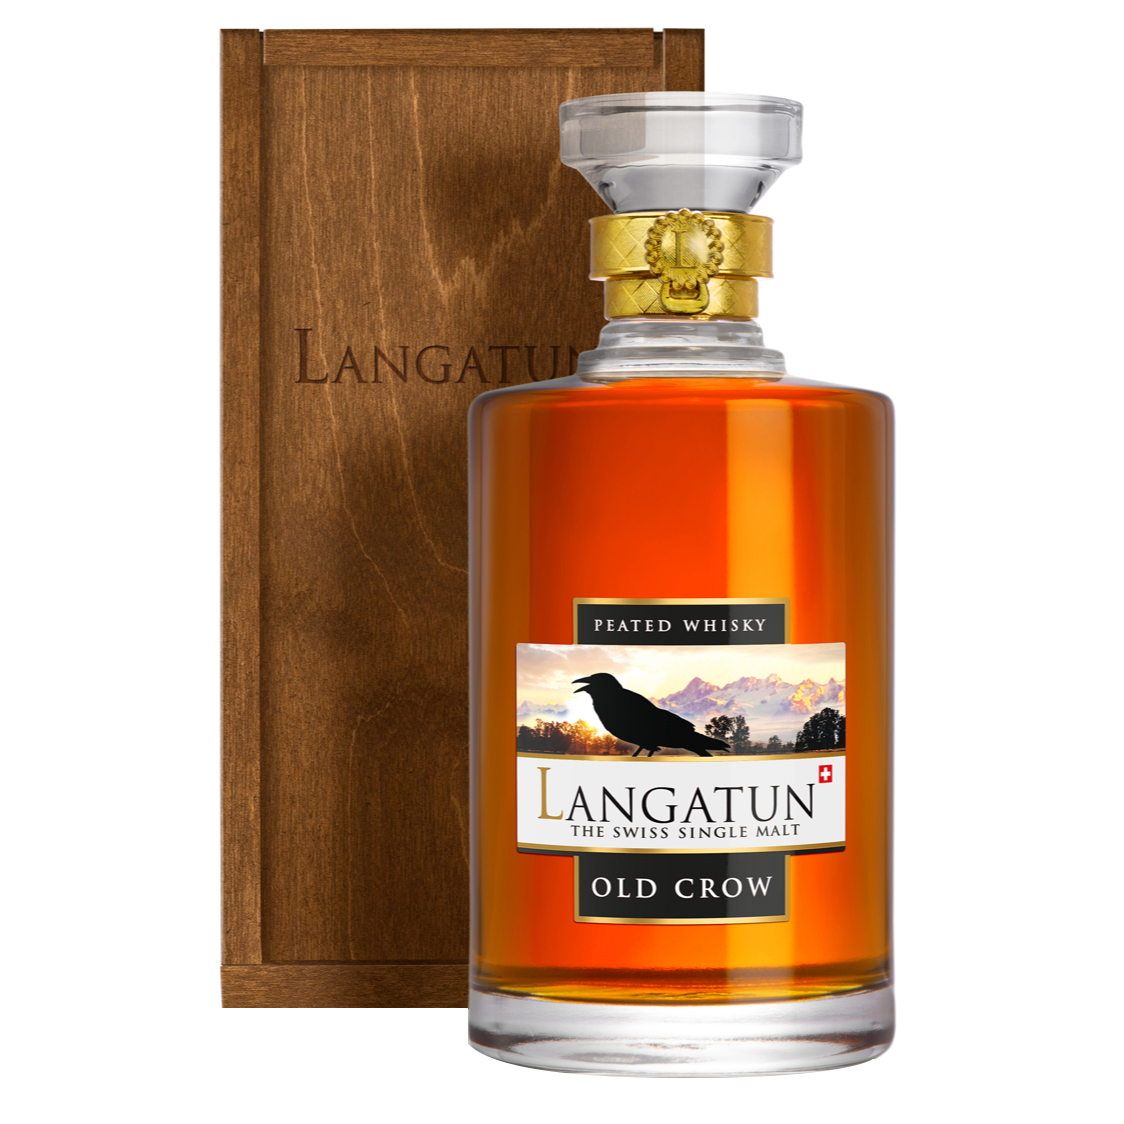 LANGATUN Old Crow Swiss Single Malt Whisky 46% vol., 0,5l